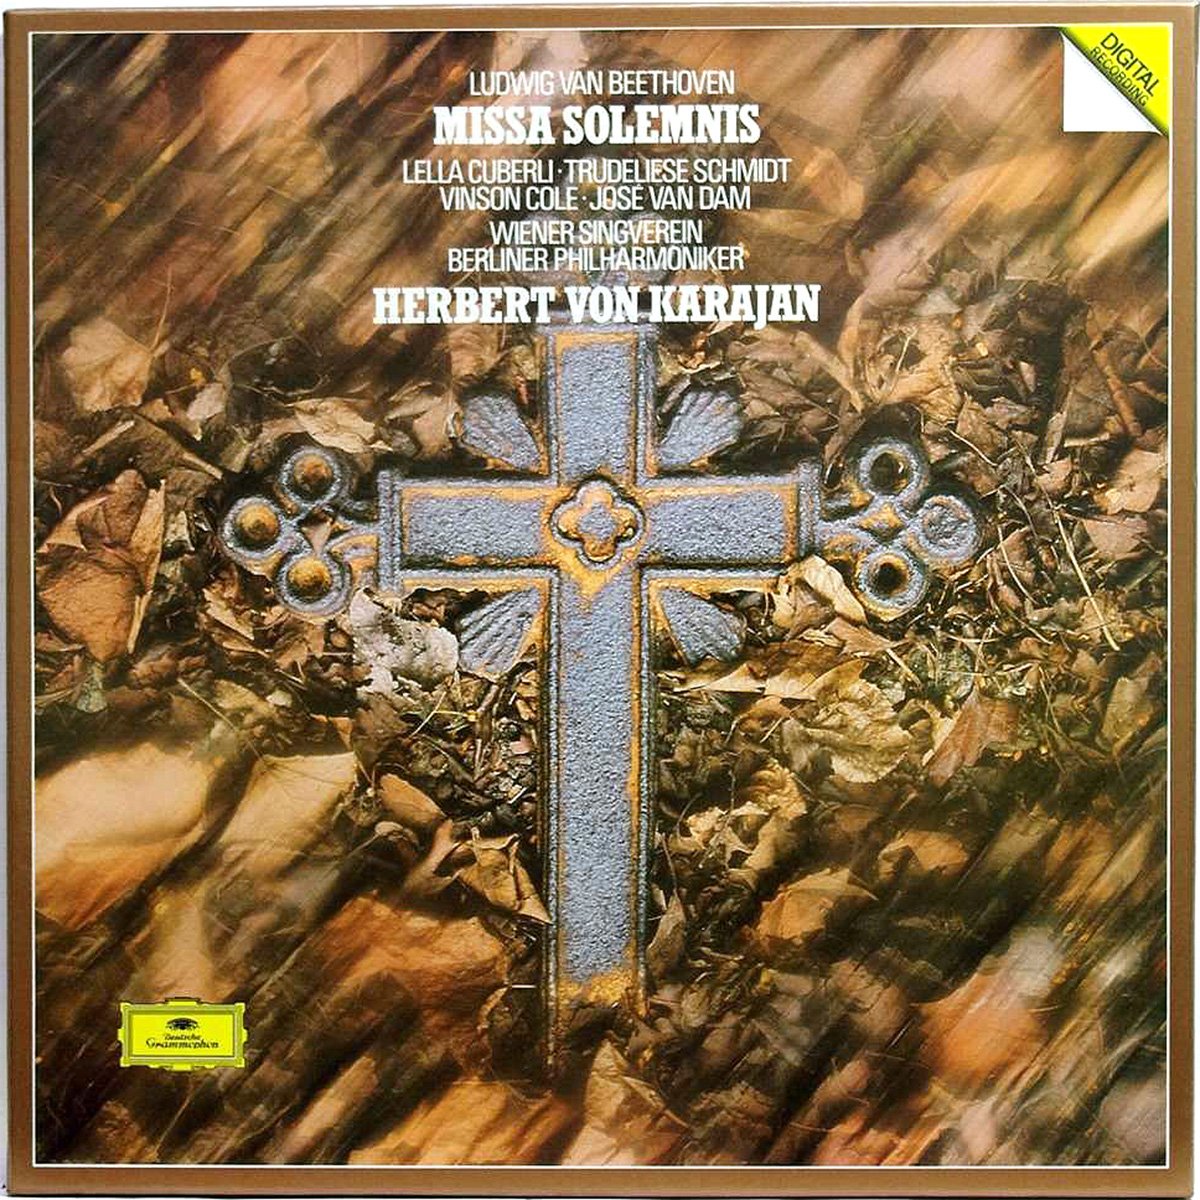 DGG 419 166_Beethoven Missa Solemnis Karajan Digital Aufnahme